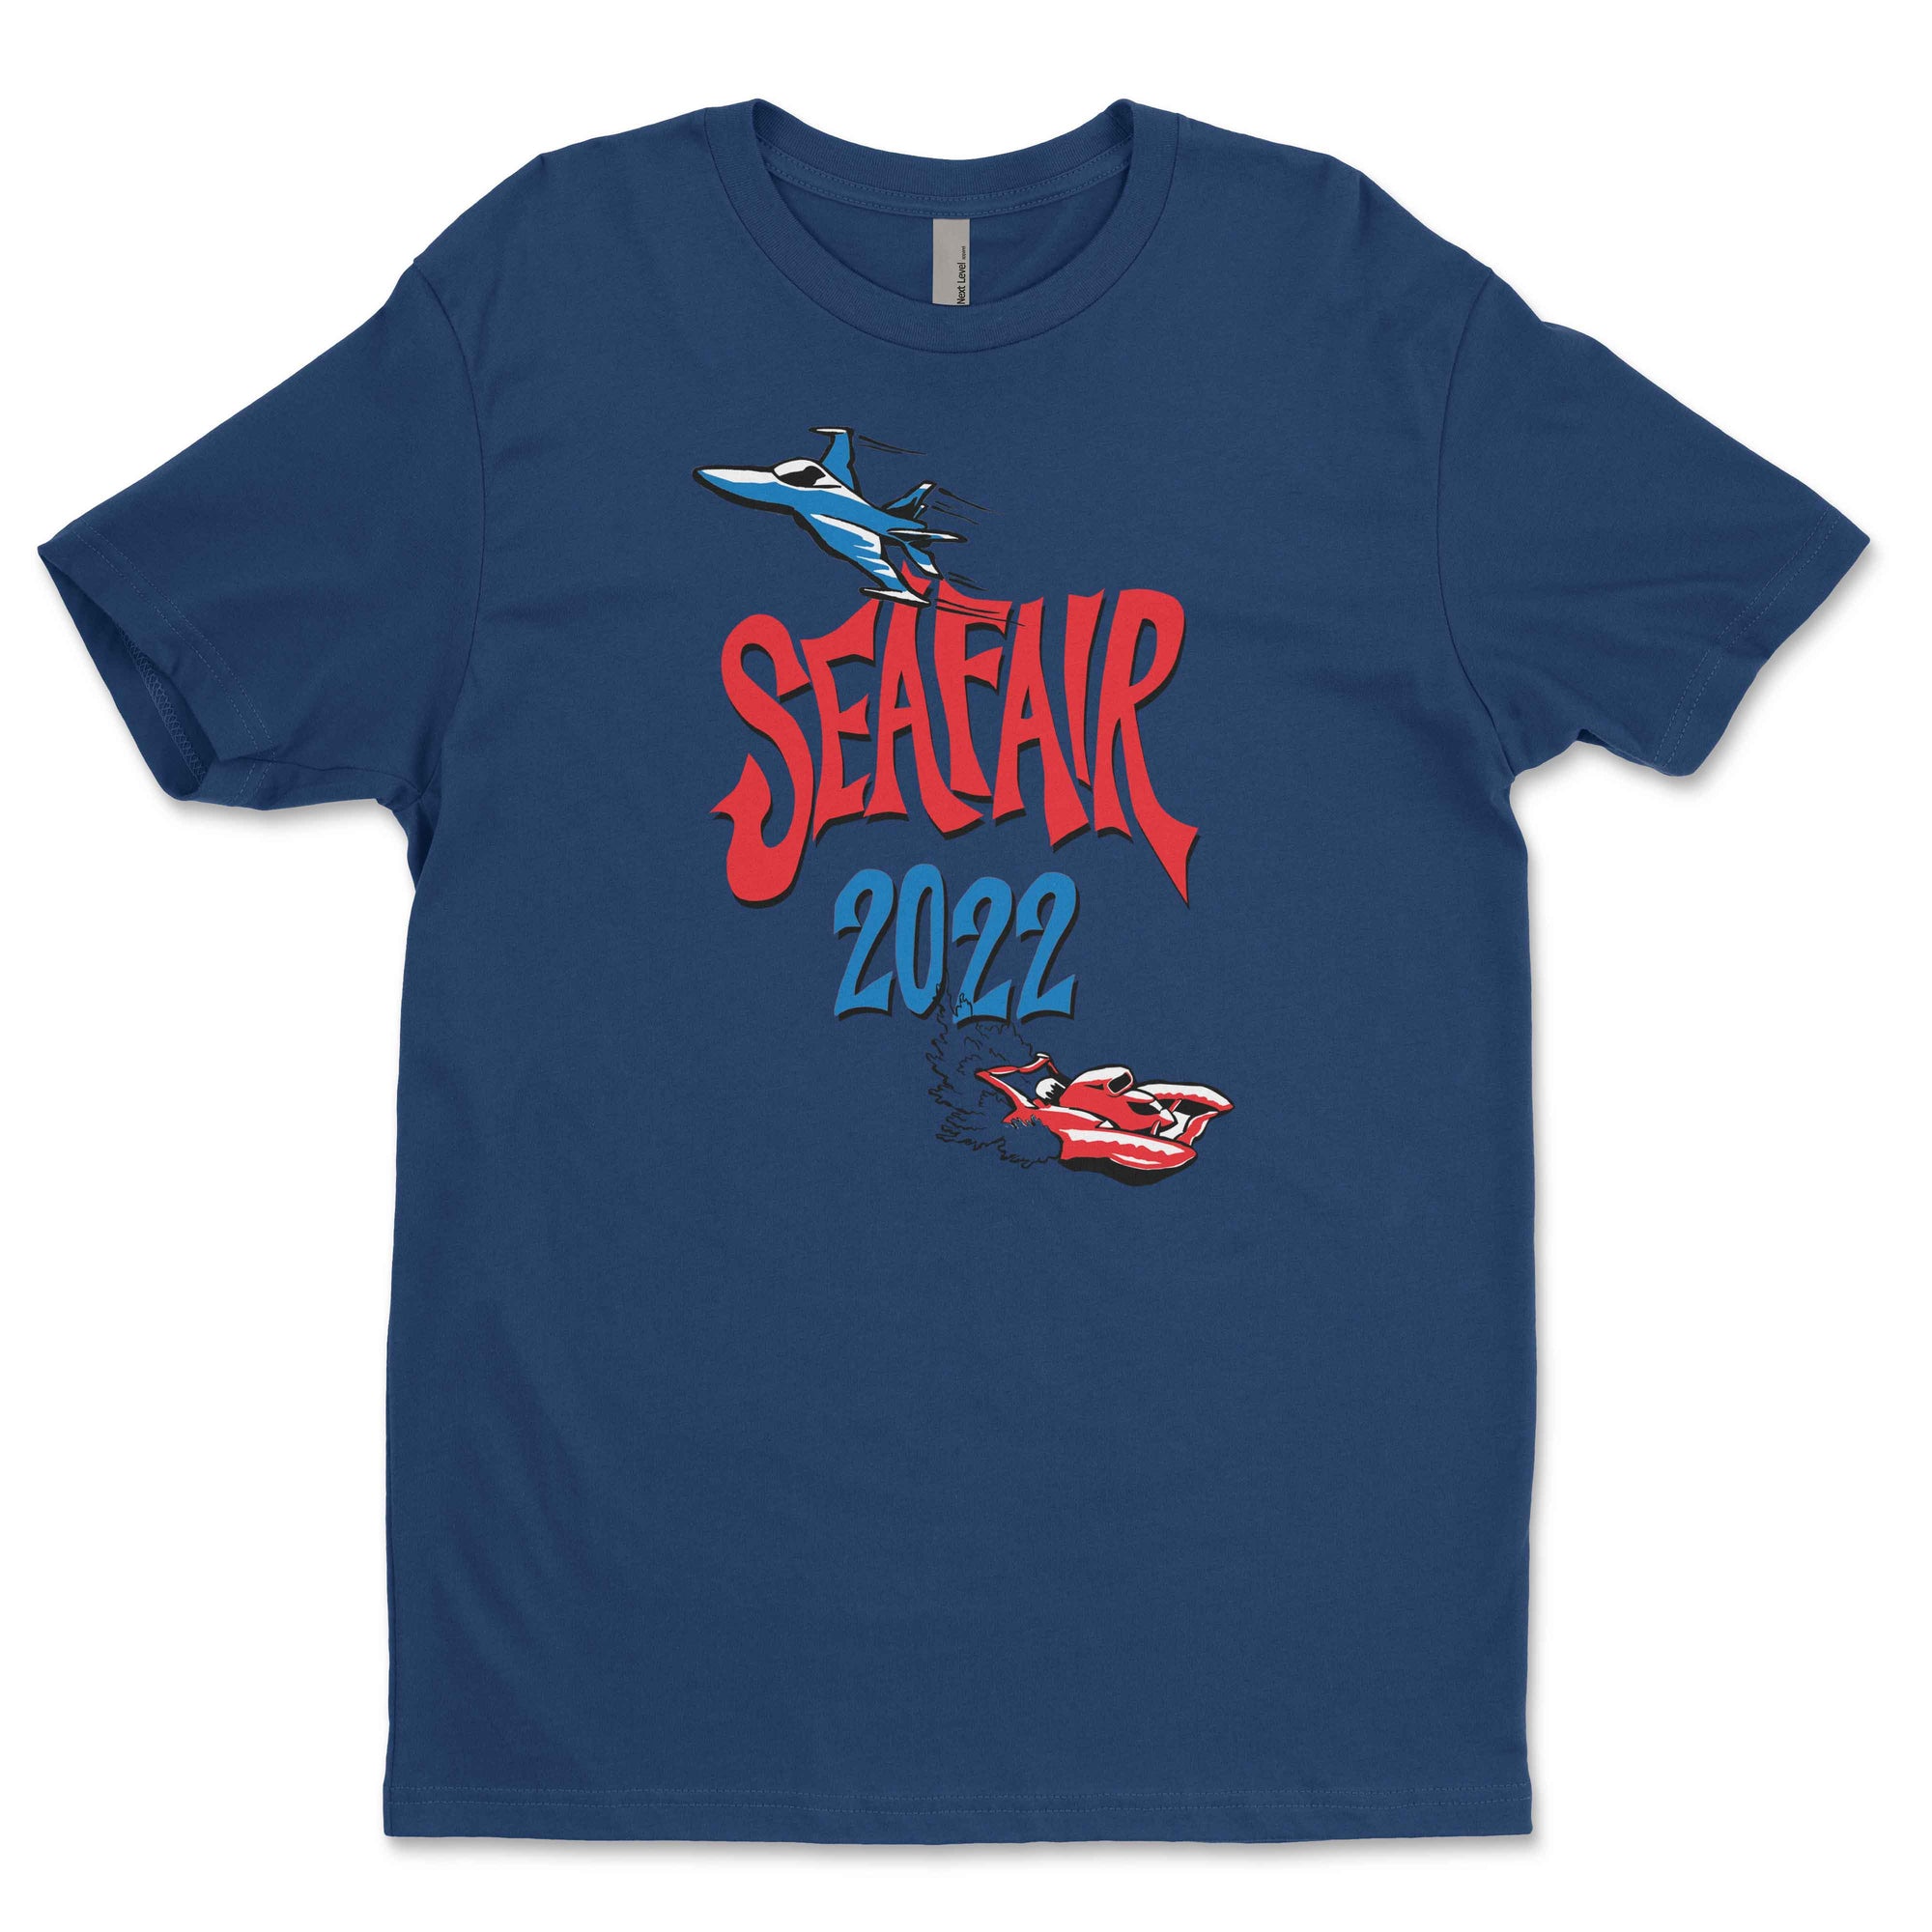 "Seafair 2022" Unisex T-Shirt